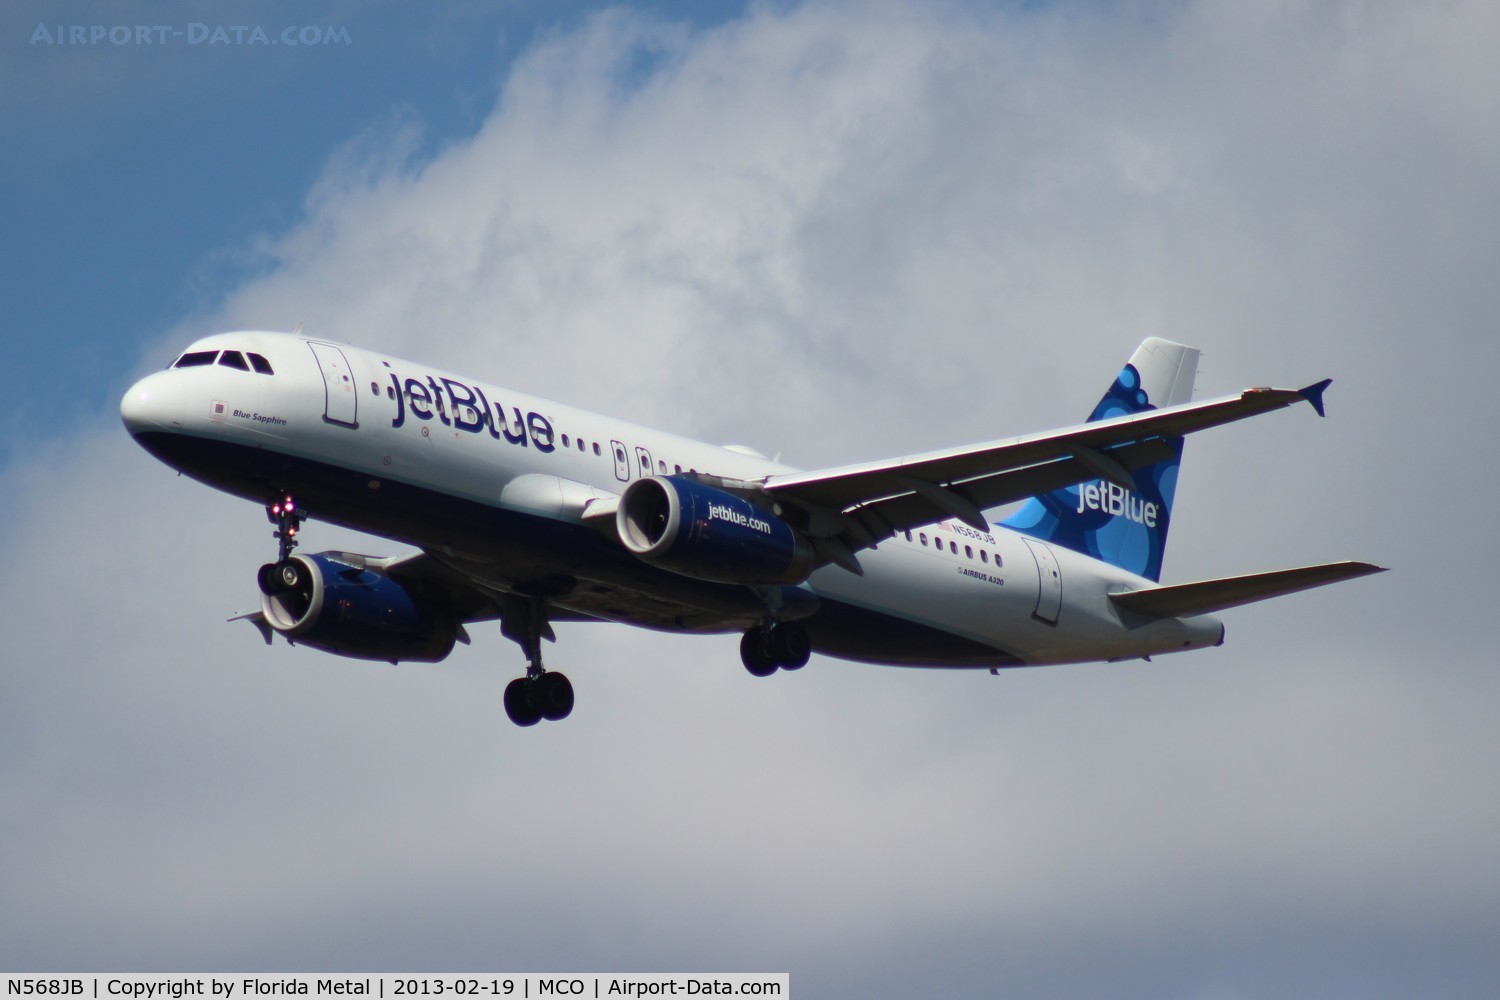 N568JB, 2003 Airbus A320-232 C/N 2063, Jet Blue A320